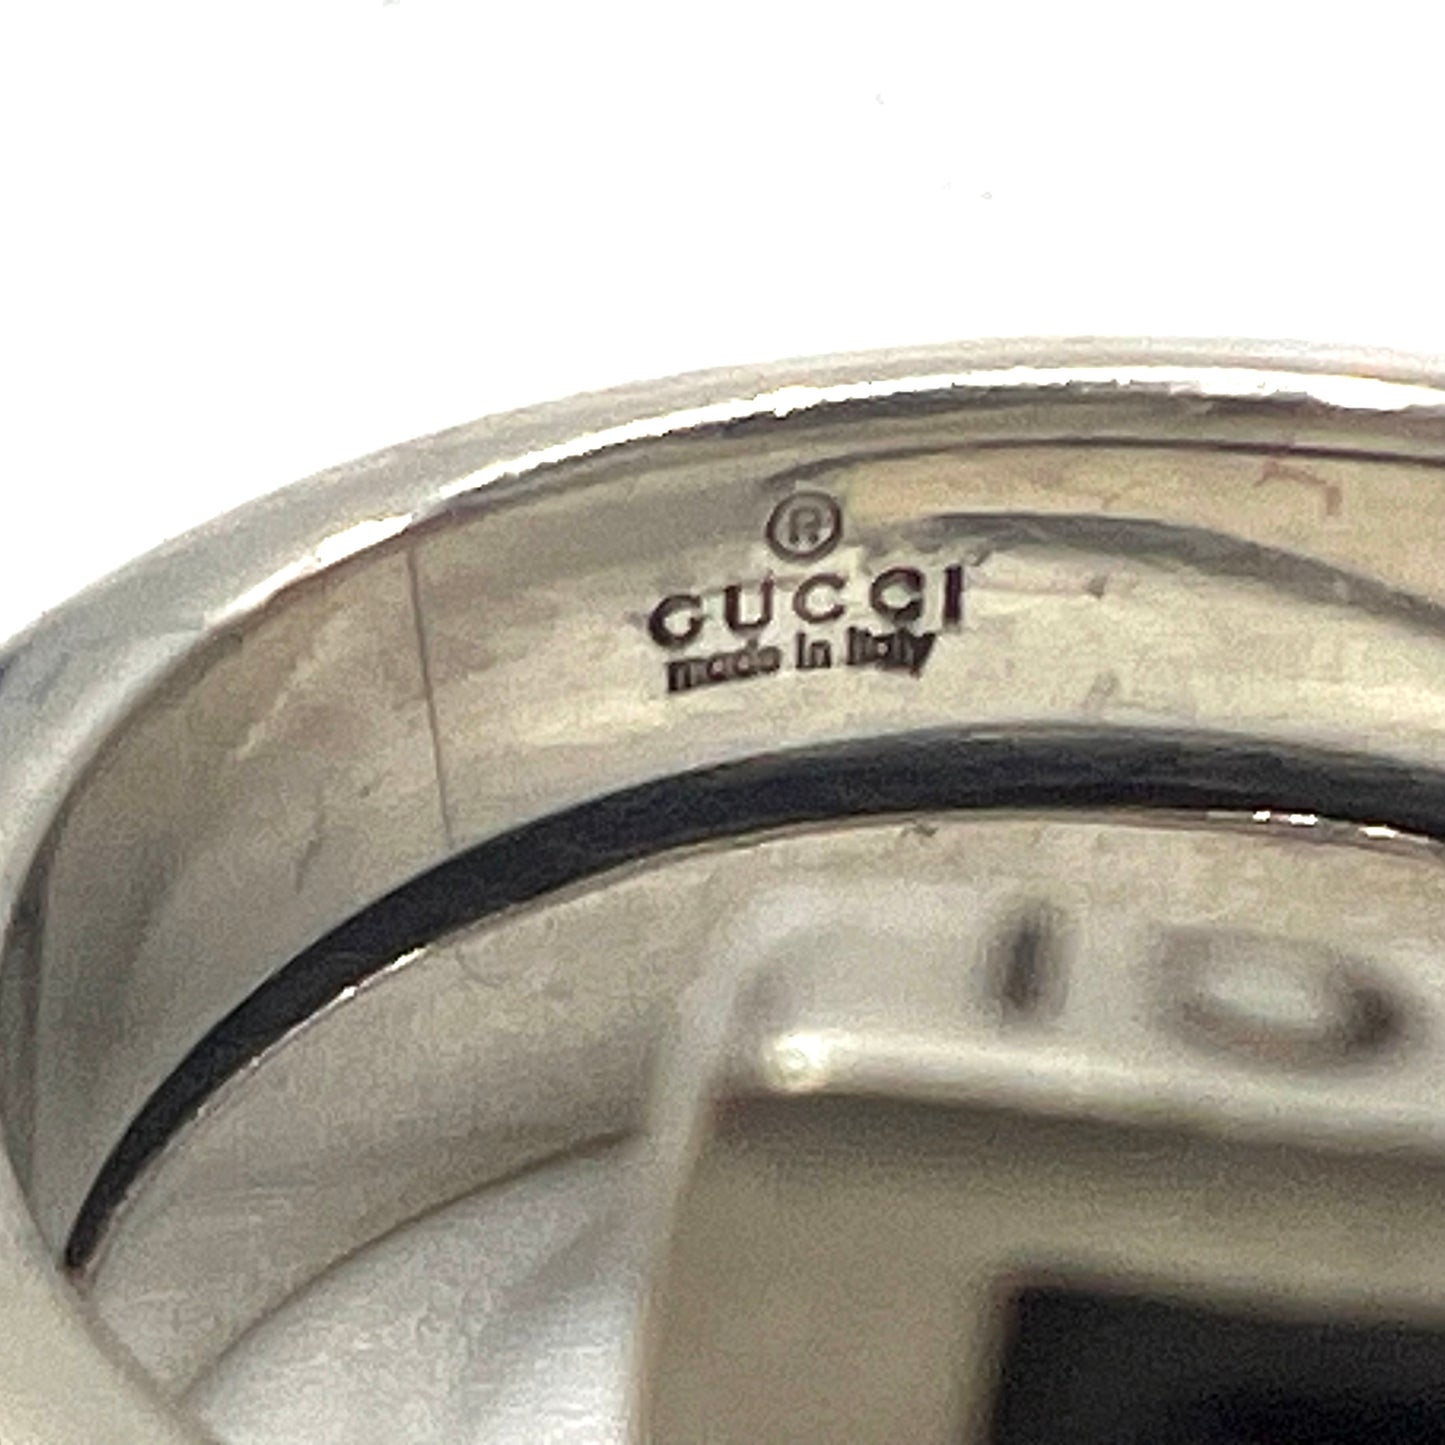 GUCCI スパイラル スネーク Gロゴ リング 指輪 10号 SILVER 925 シルバー SPIRAL G RING イタリア製